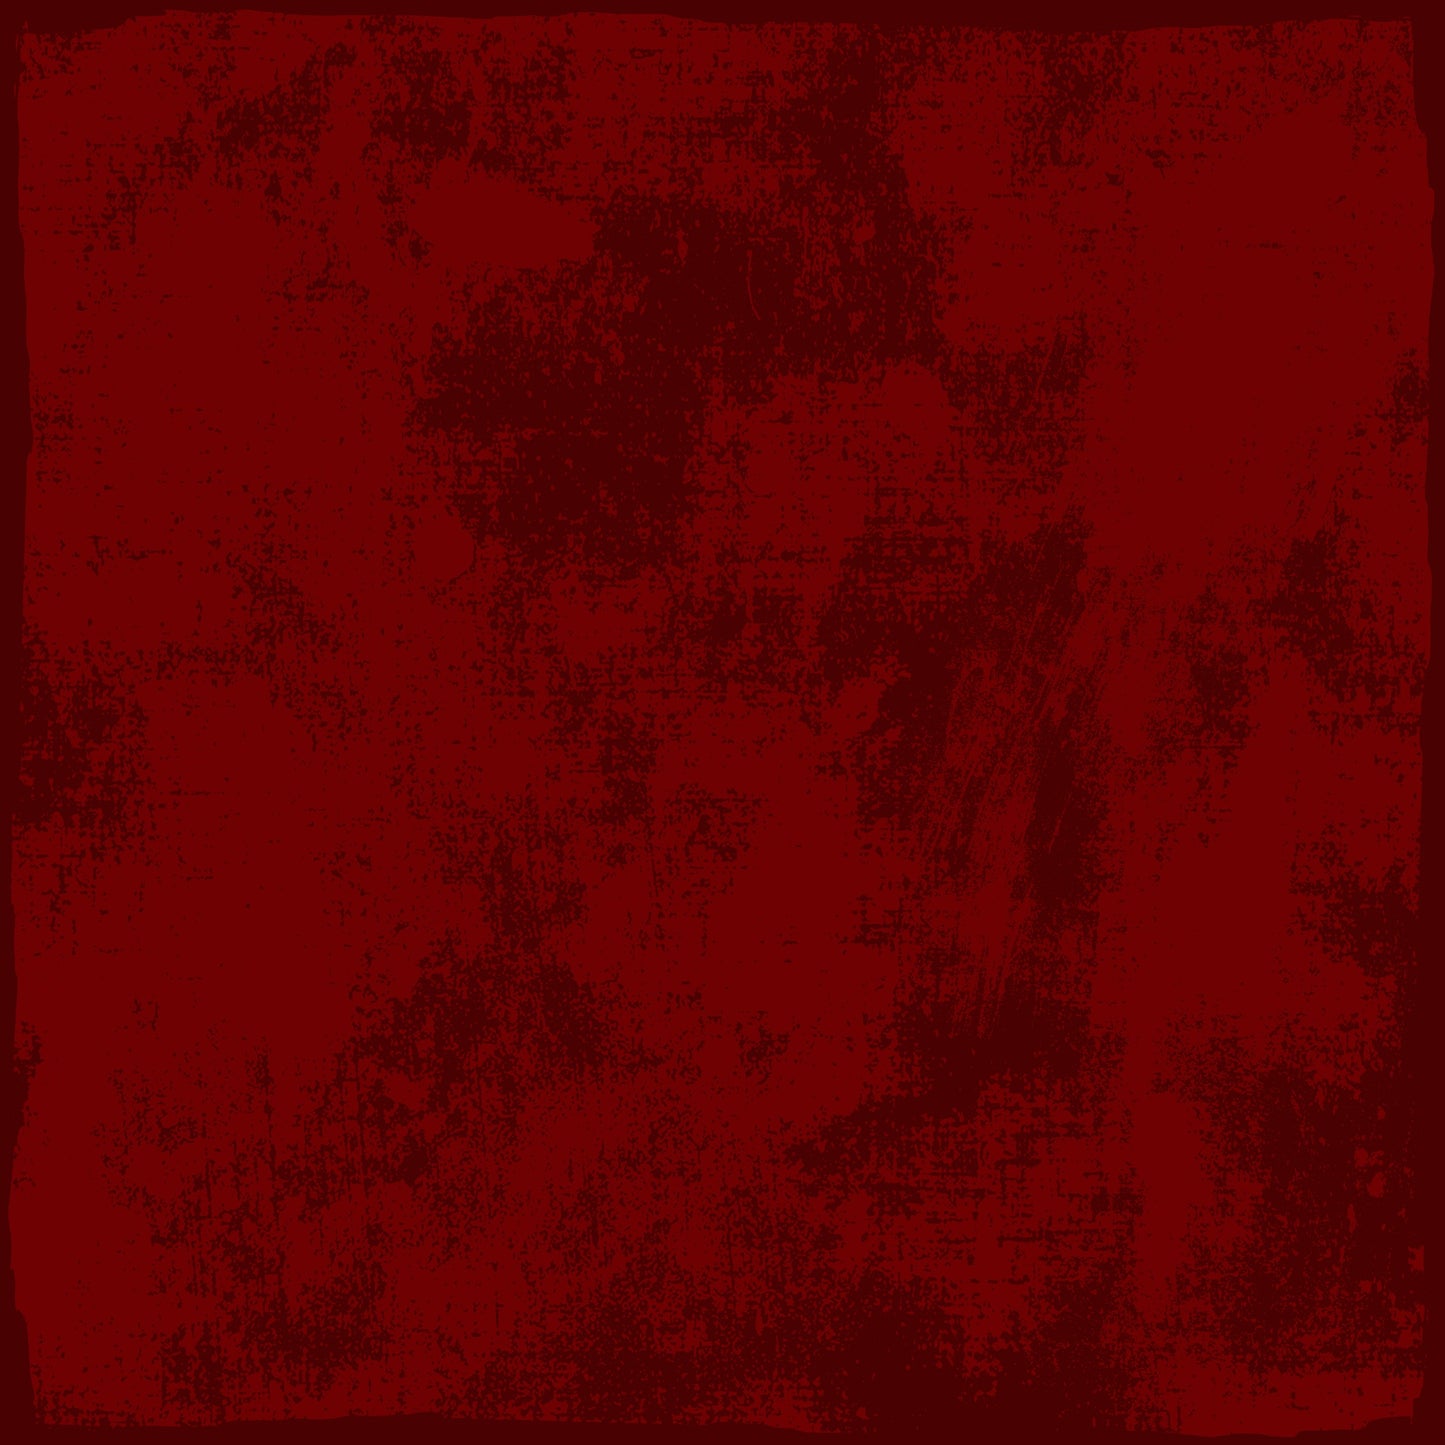 Prim Dark Red Splotch -  Background 12x12